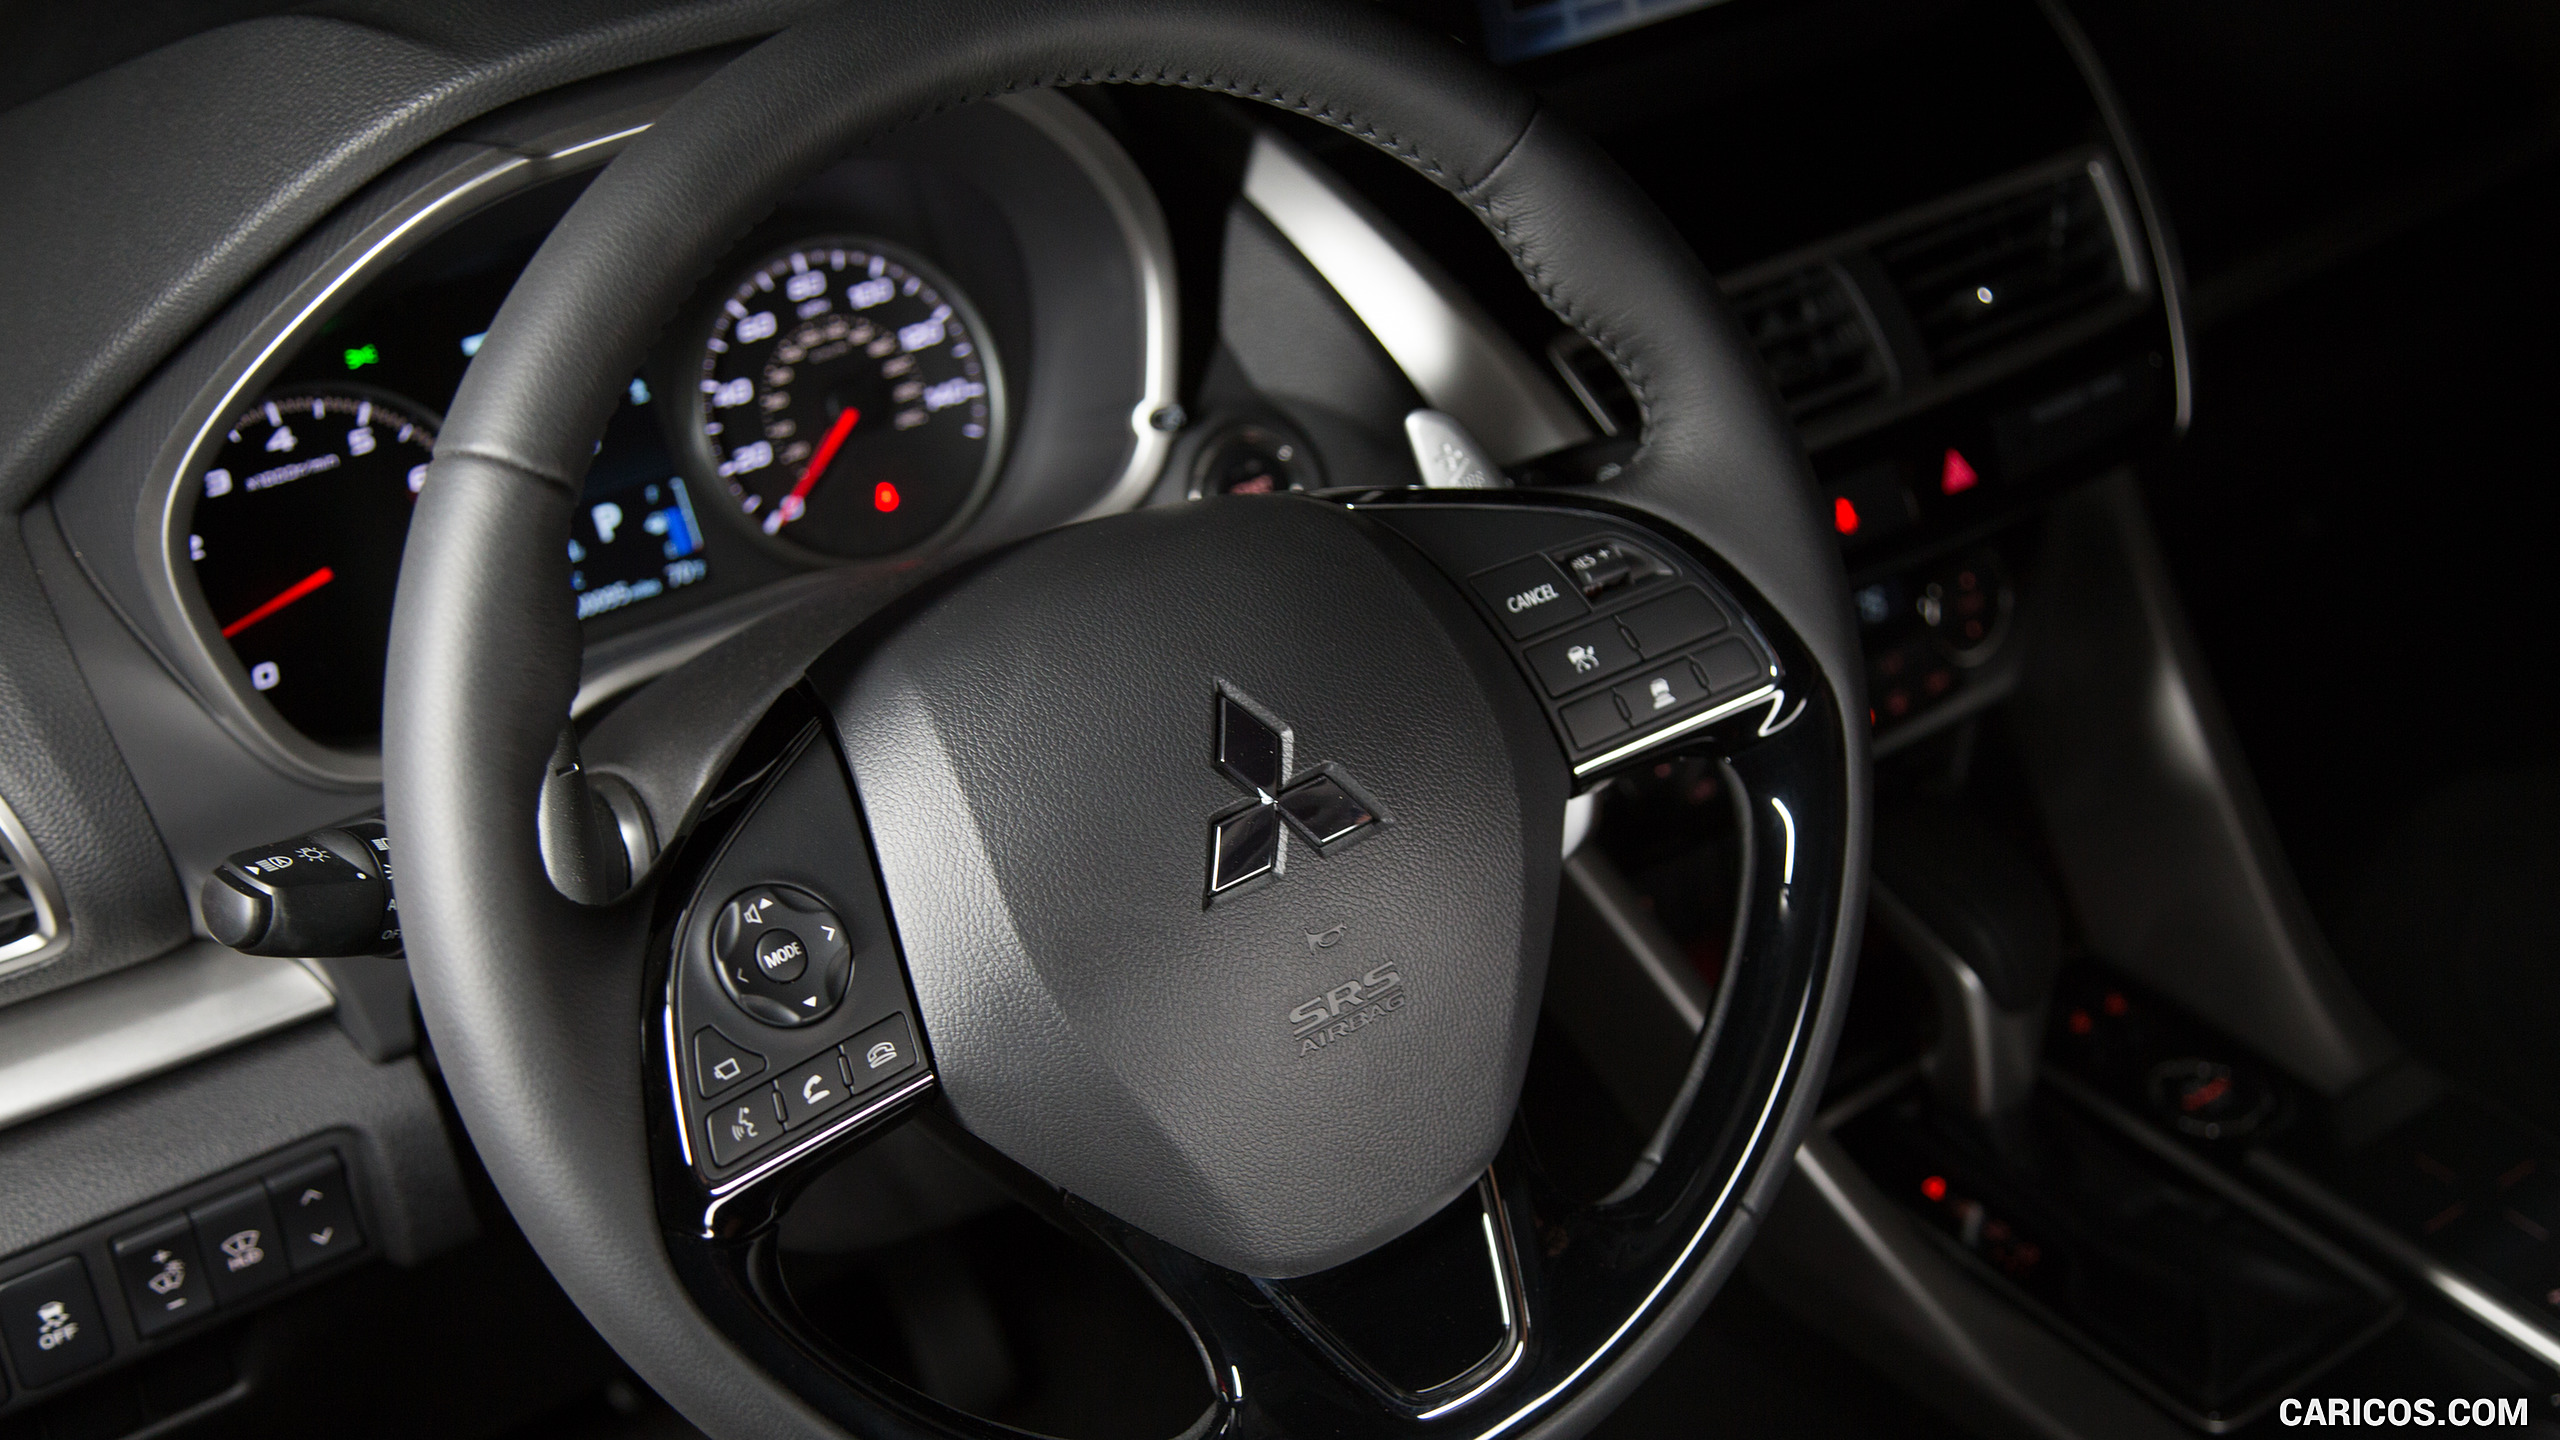 2018 Mitsubishi Eclipse Cross - Interior, Steering Wheel, #108 of 173